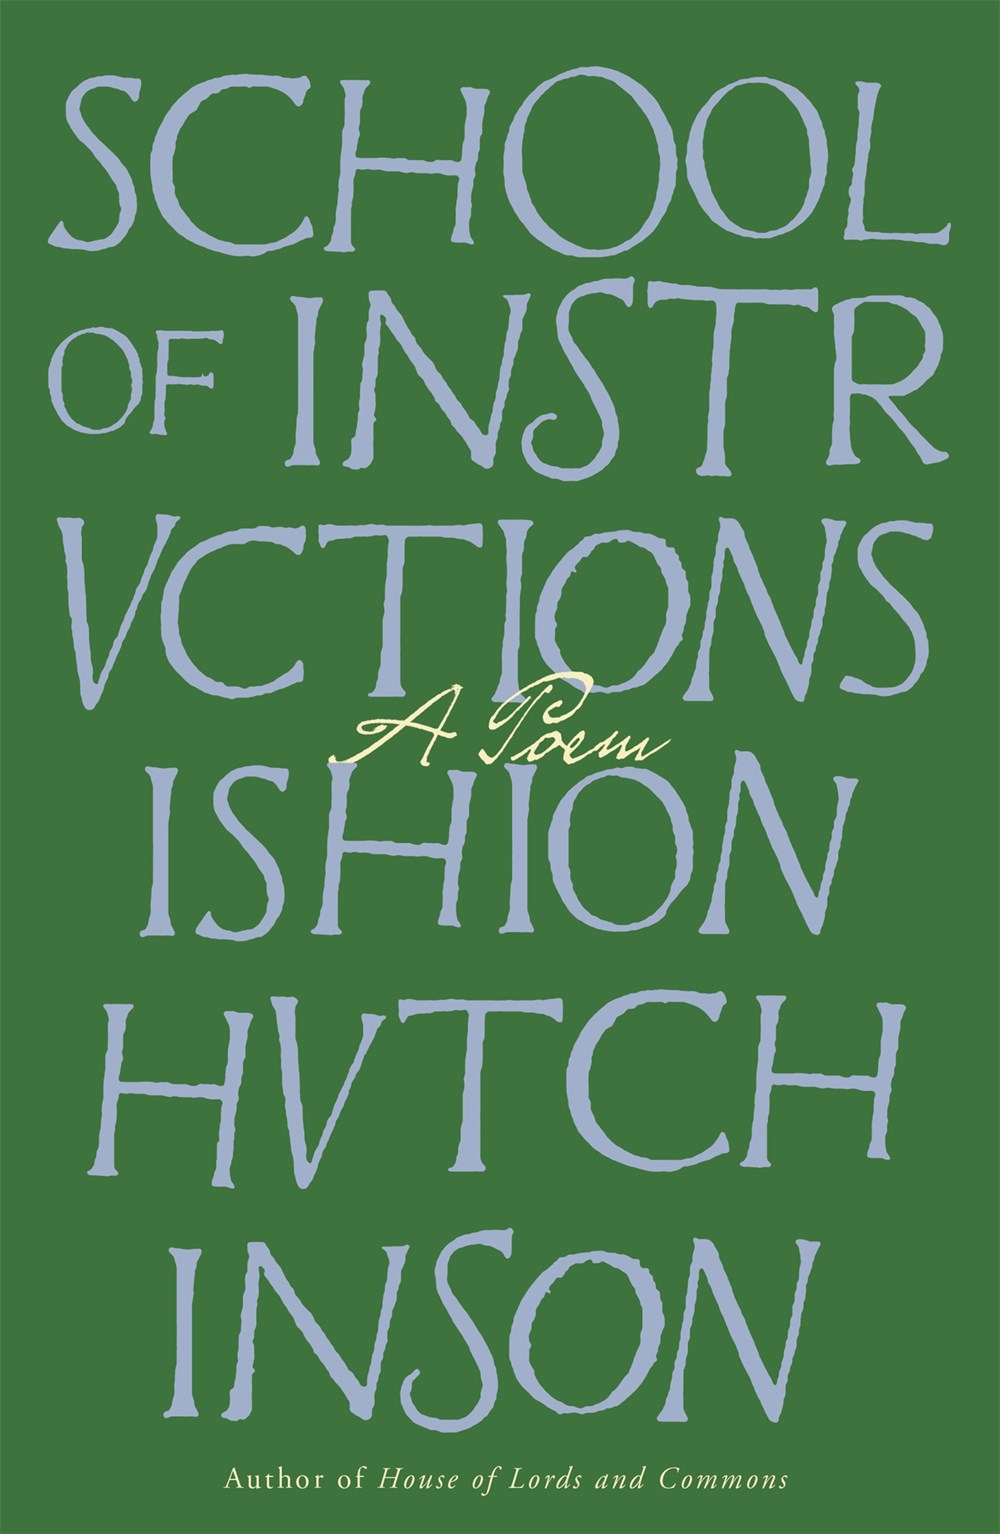 School of Instructions by Ishion Hutchinson